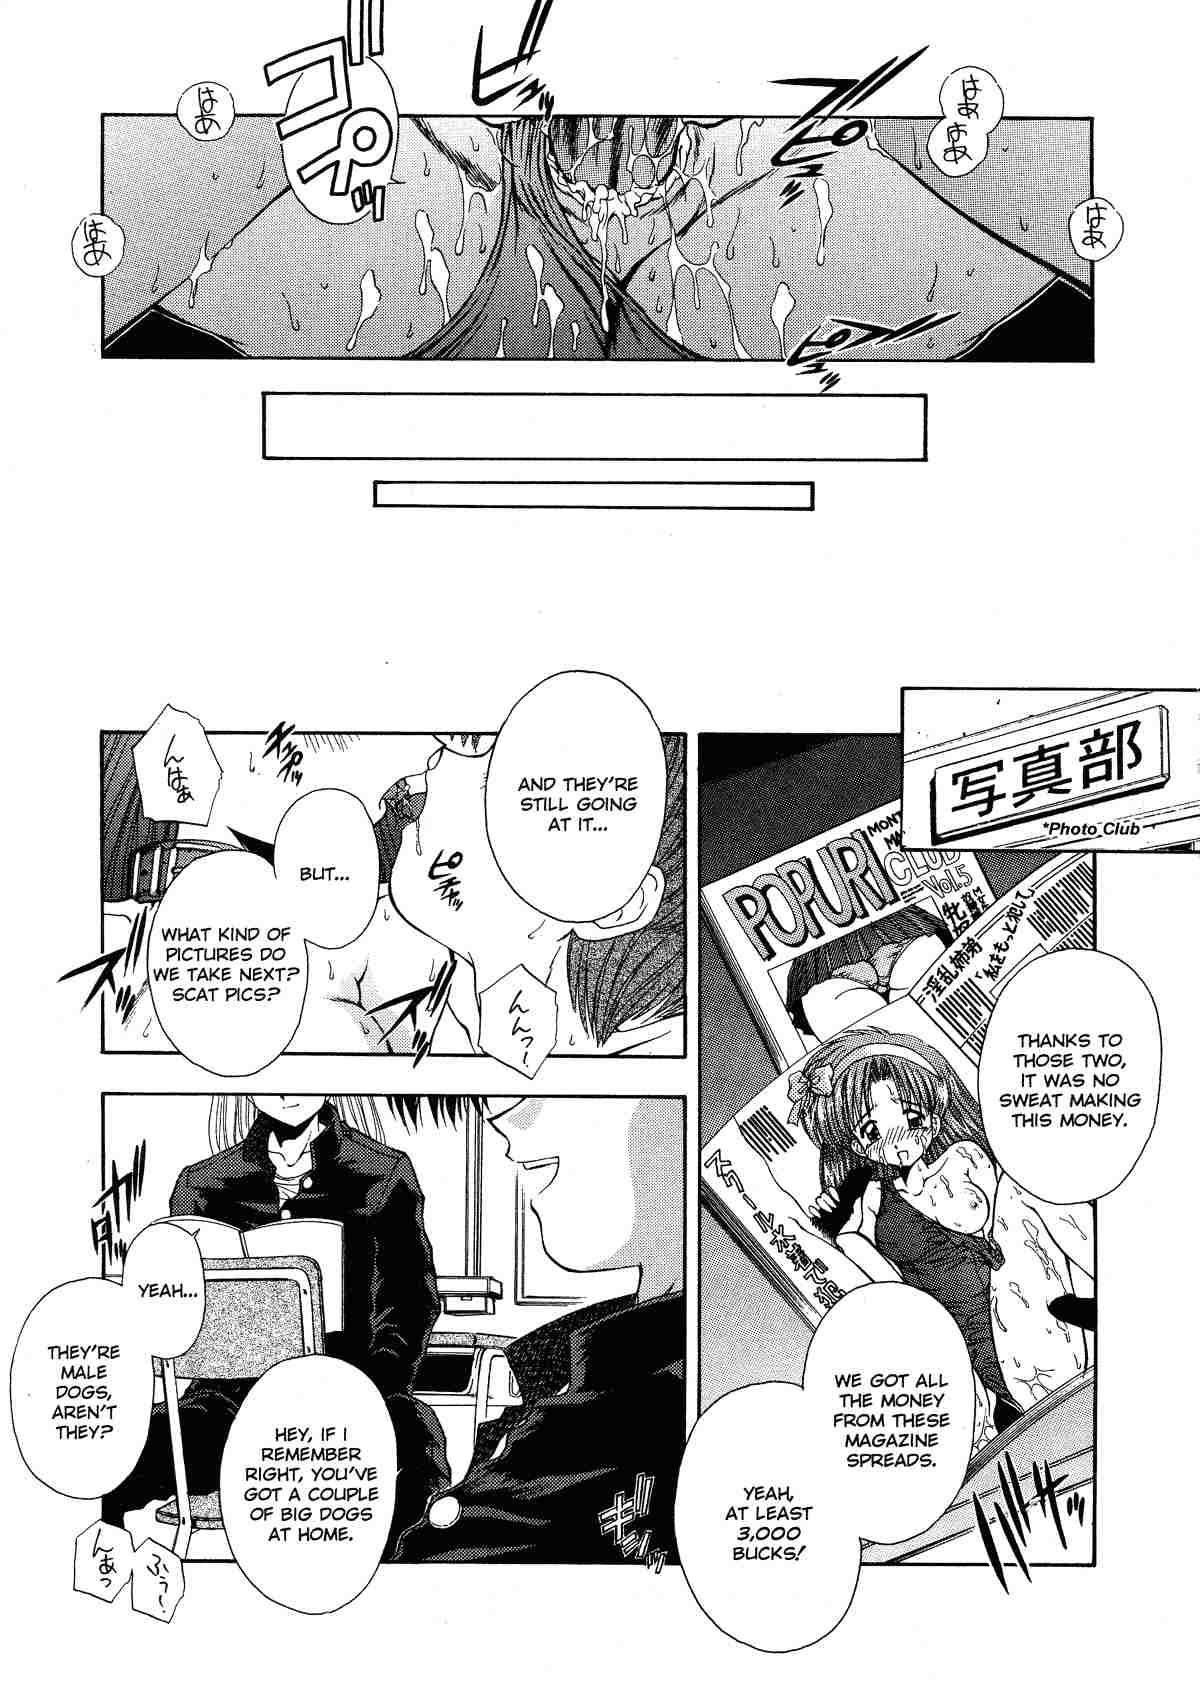 Innocence 52 hentai manga